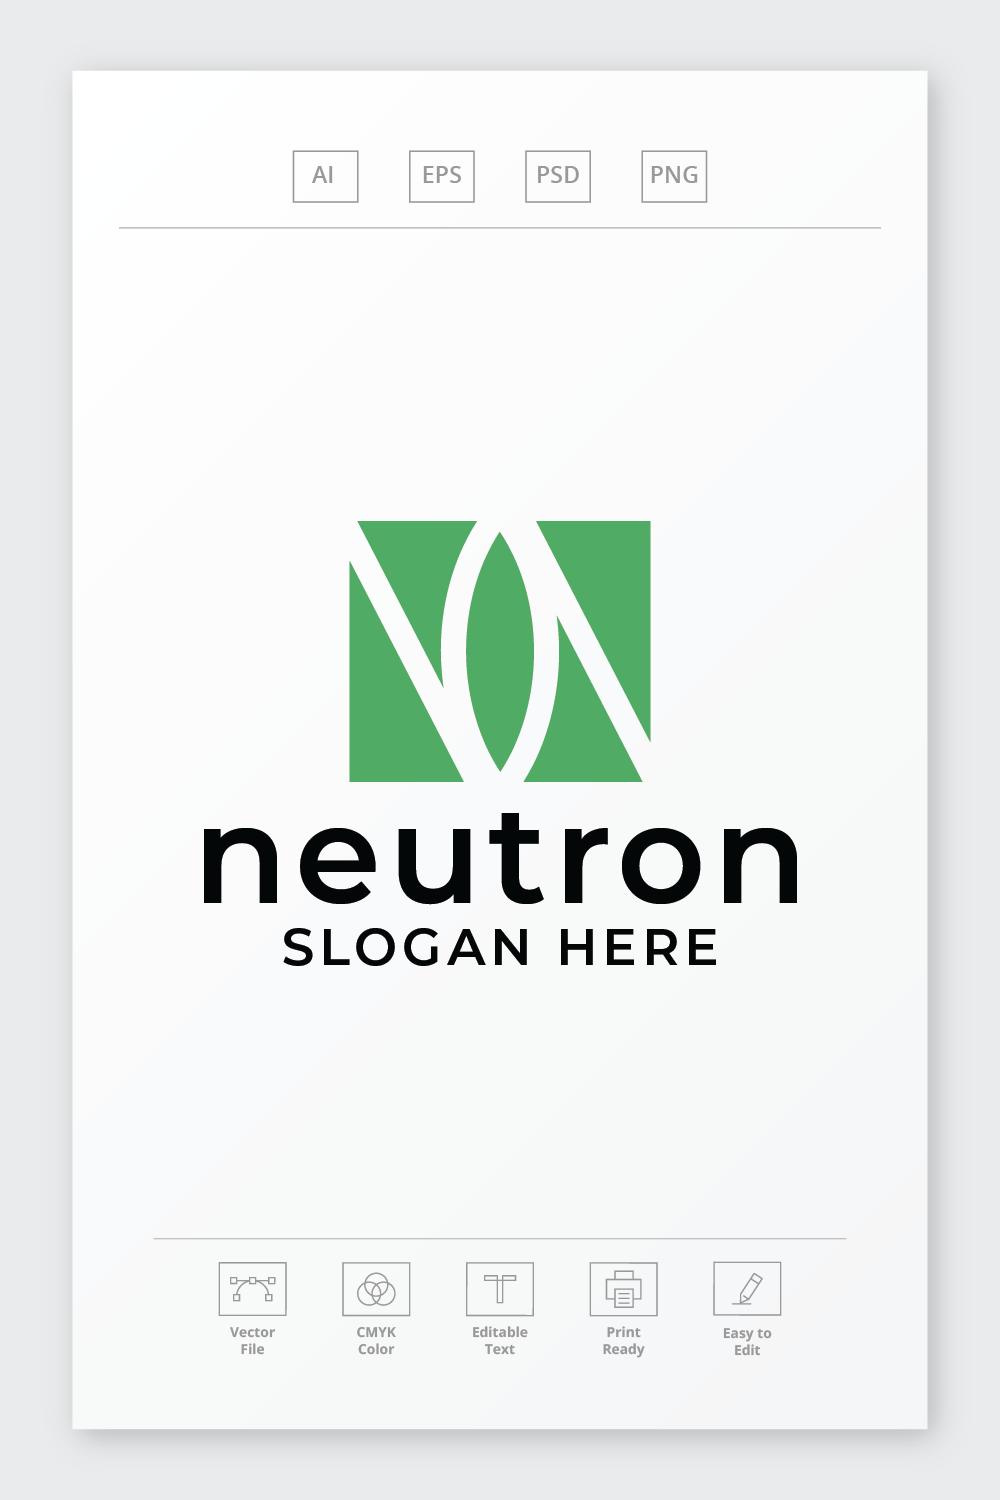 Neutron Letter N Logo pinterest preview image.